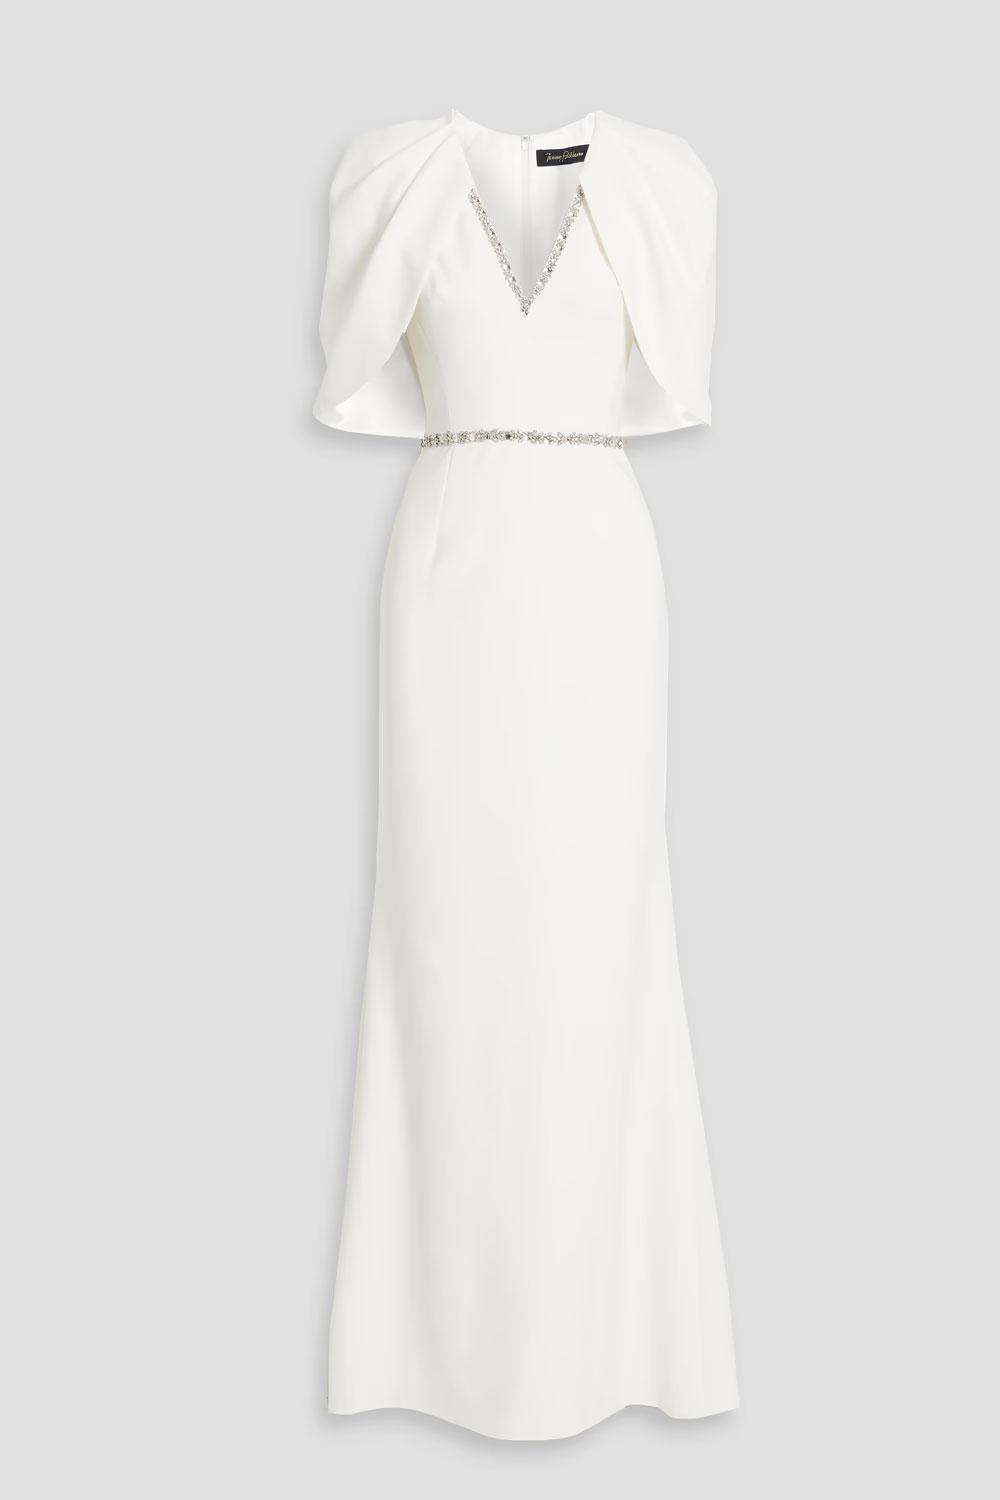 JENNY PACKHAM Cape-effect embellished crepe bridal gown